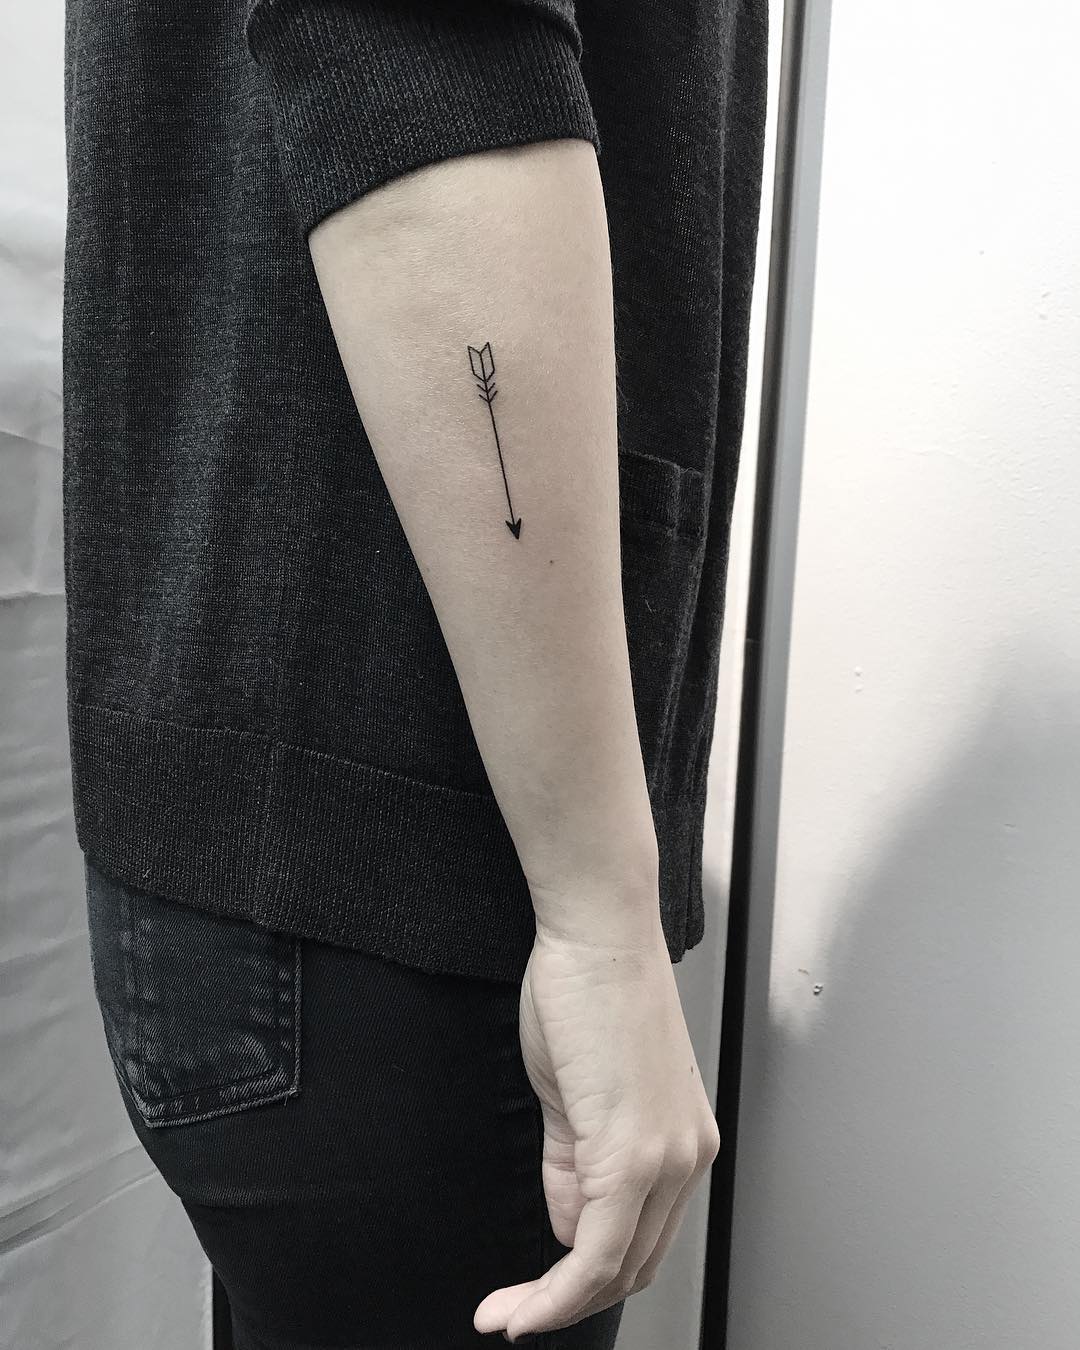 Beautiful Fineline Arrow Tattoo.